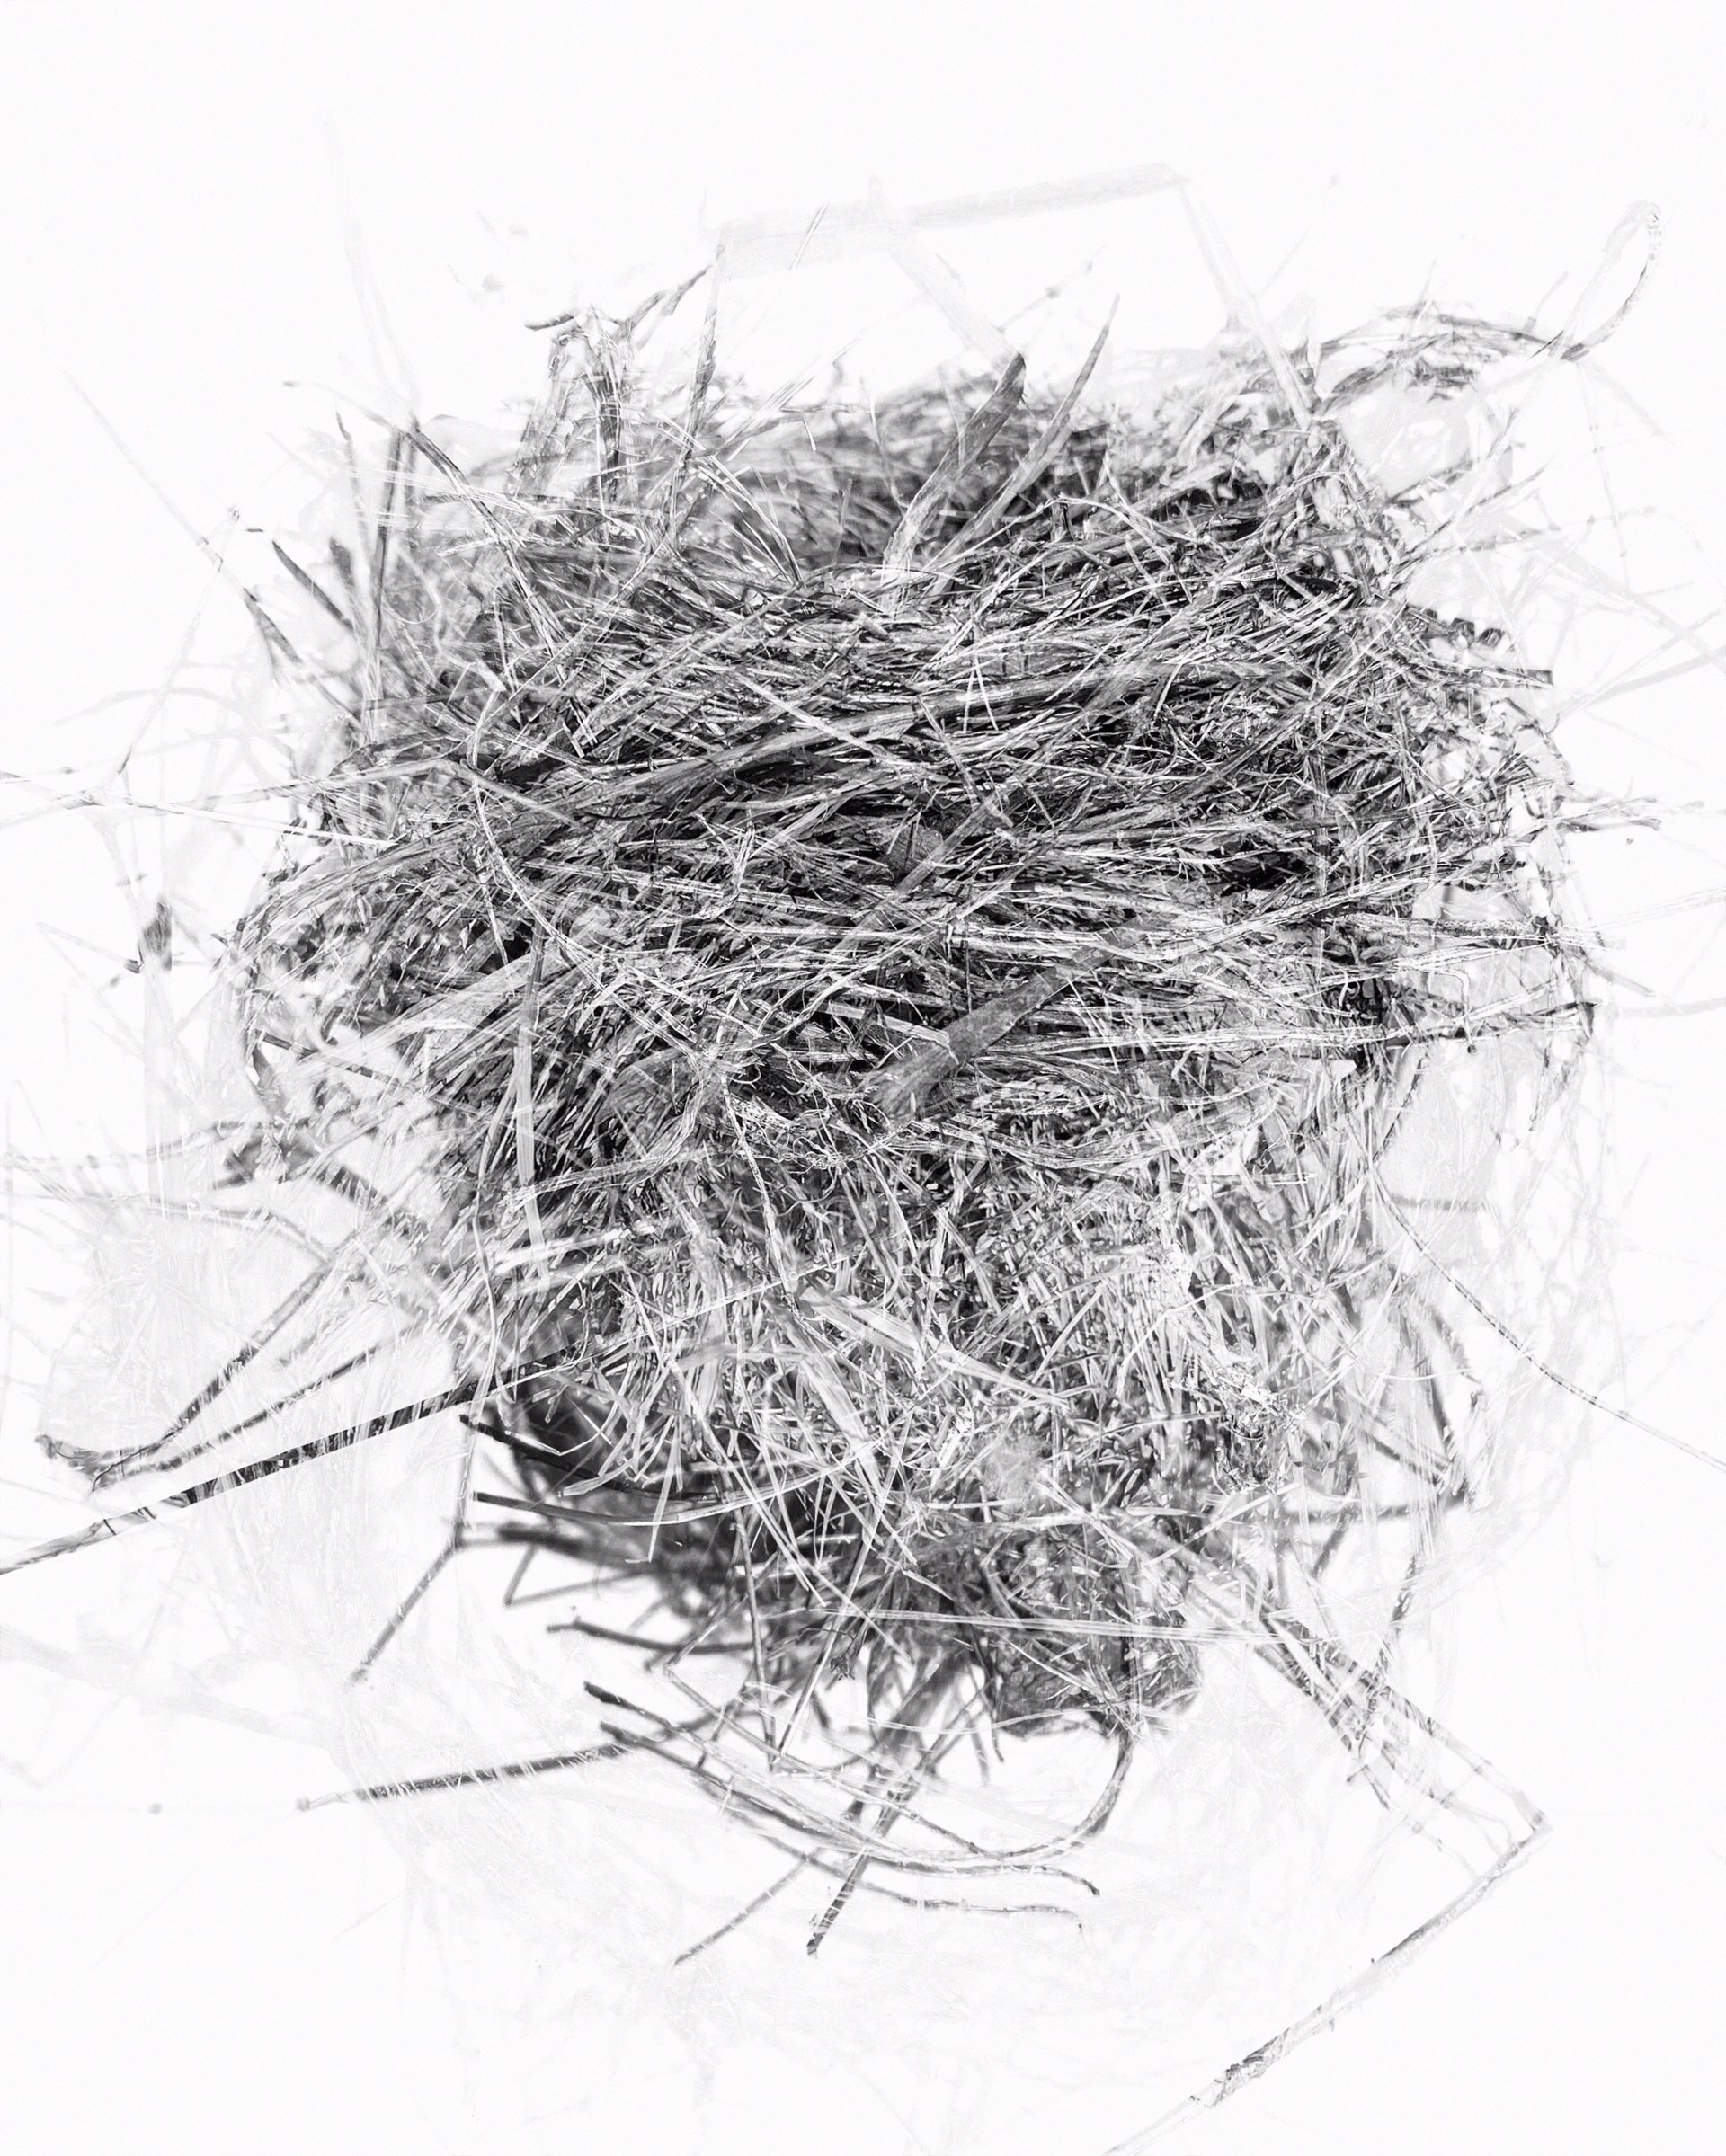 Holding: nest found north of Epworth, IA by Rachel Deutmeyer